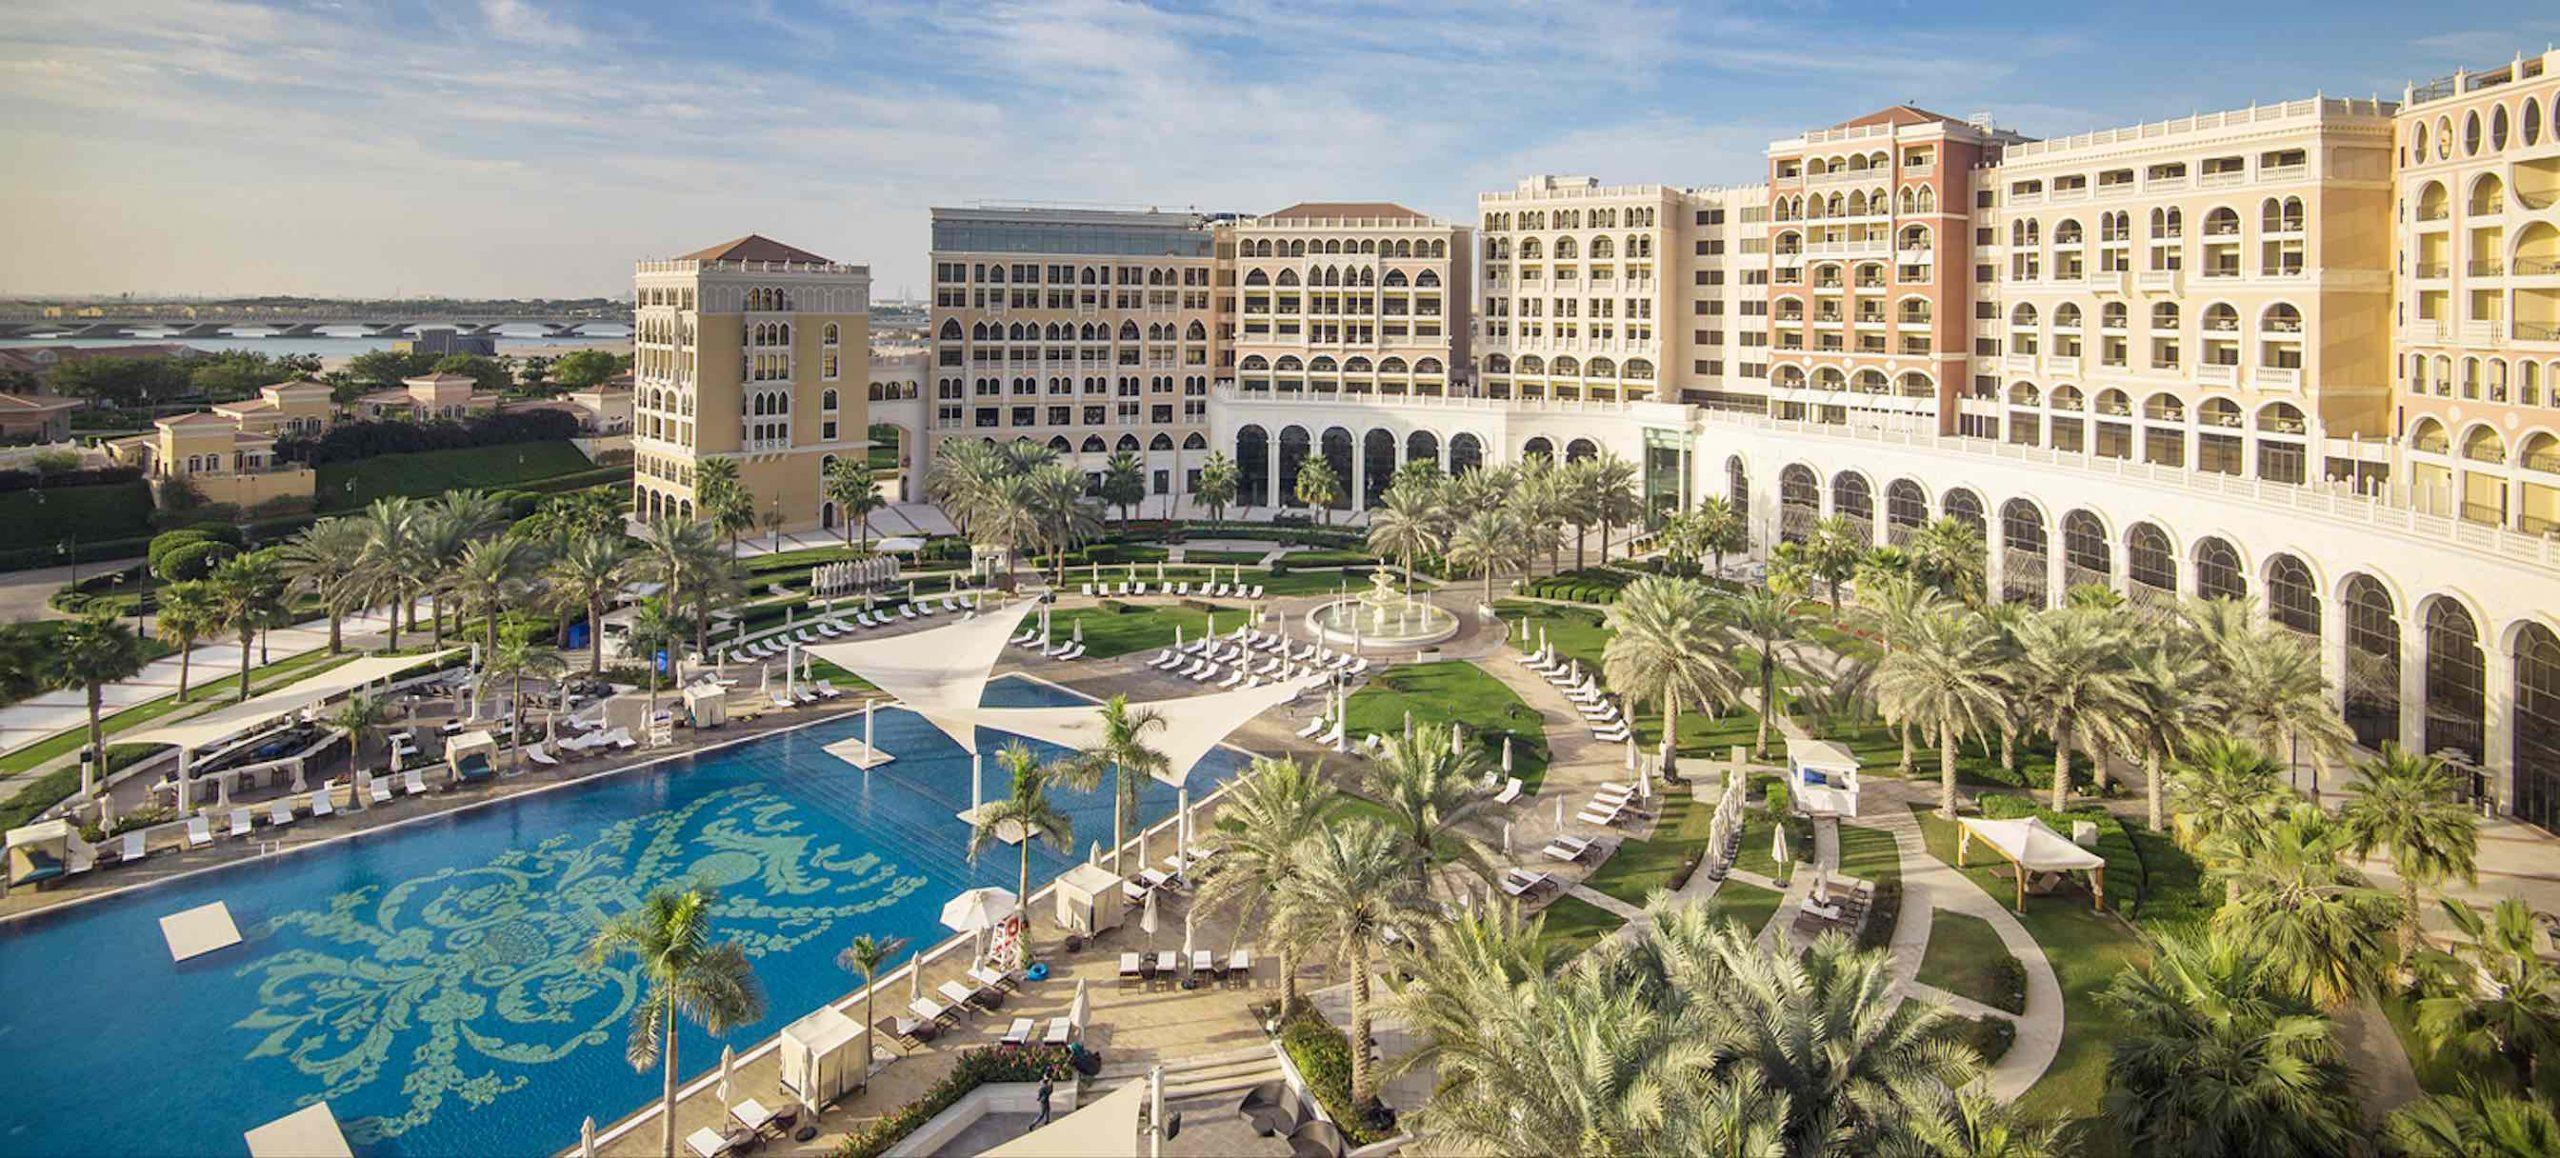 Staycation Spotlight: The Ritz-Carlton Abu Dhabi, Grand Canal